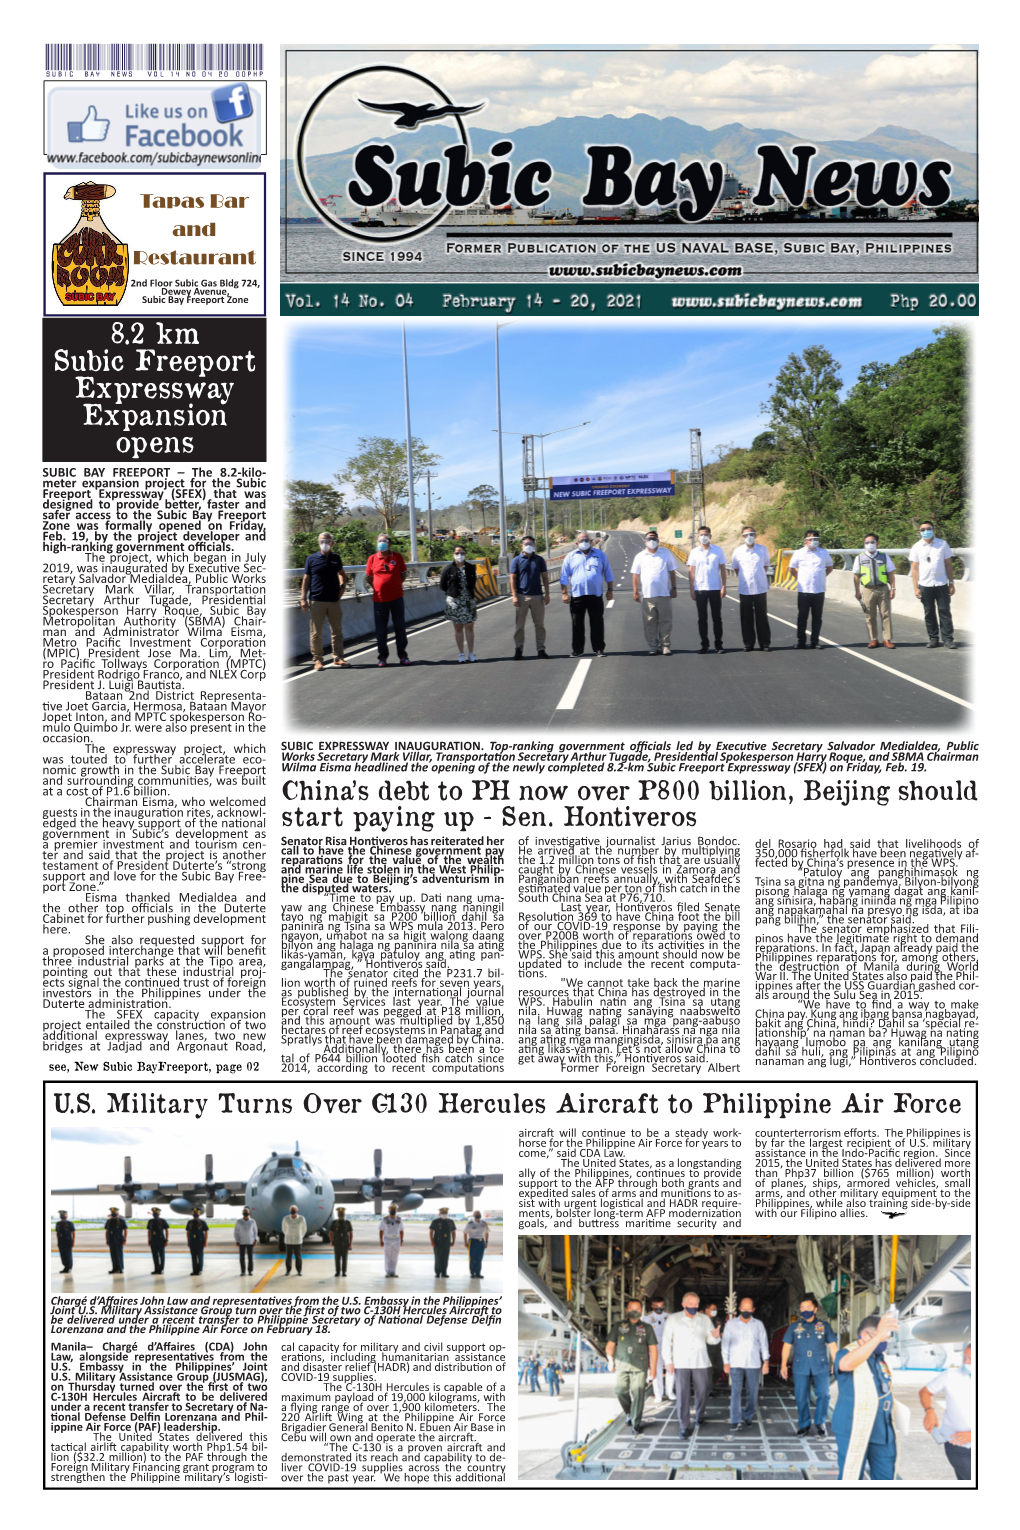 Subic Bay News Vol 14 No 04 20.00Php